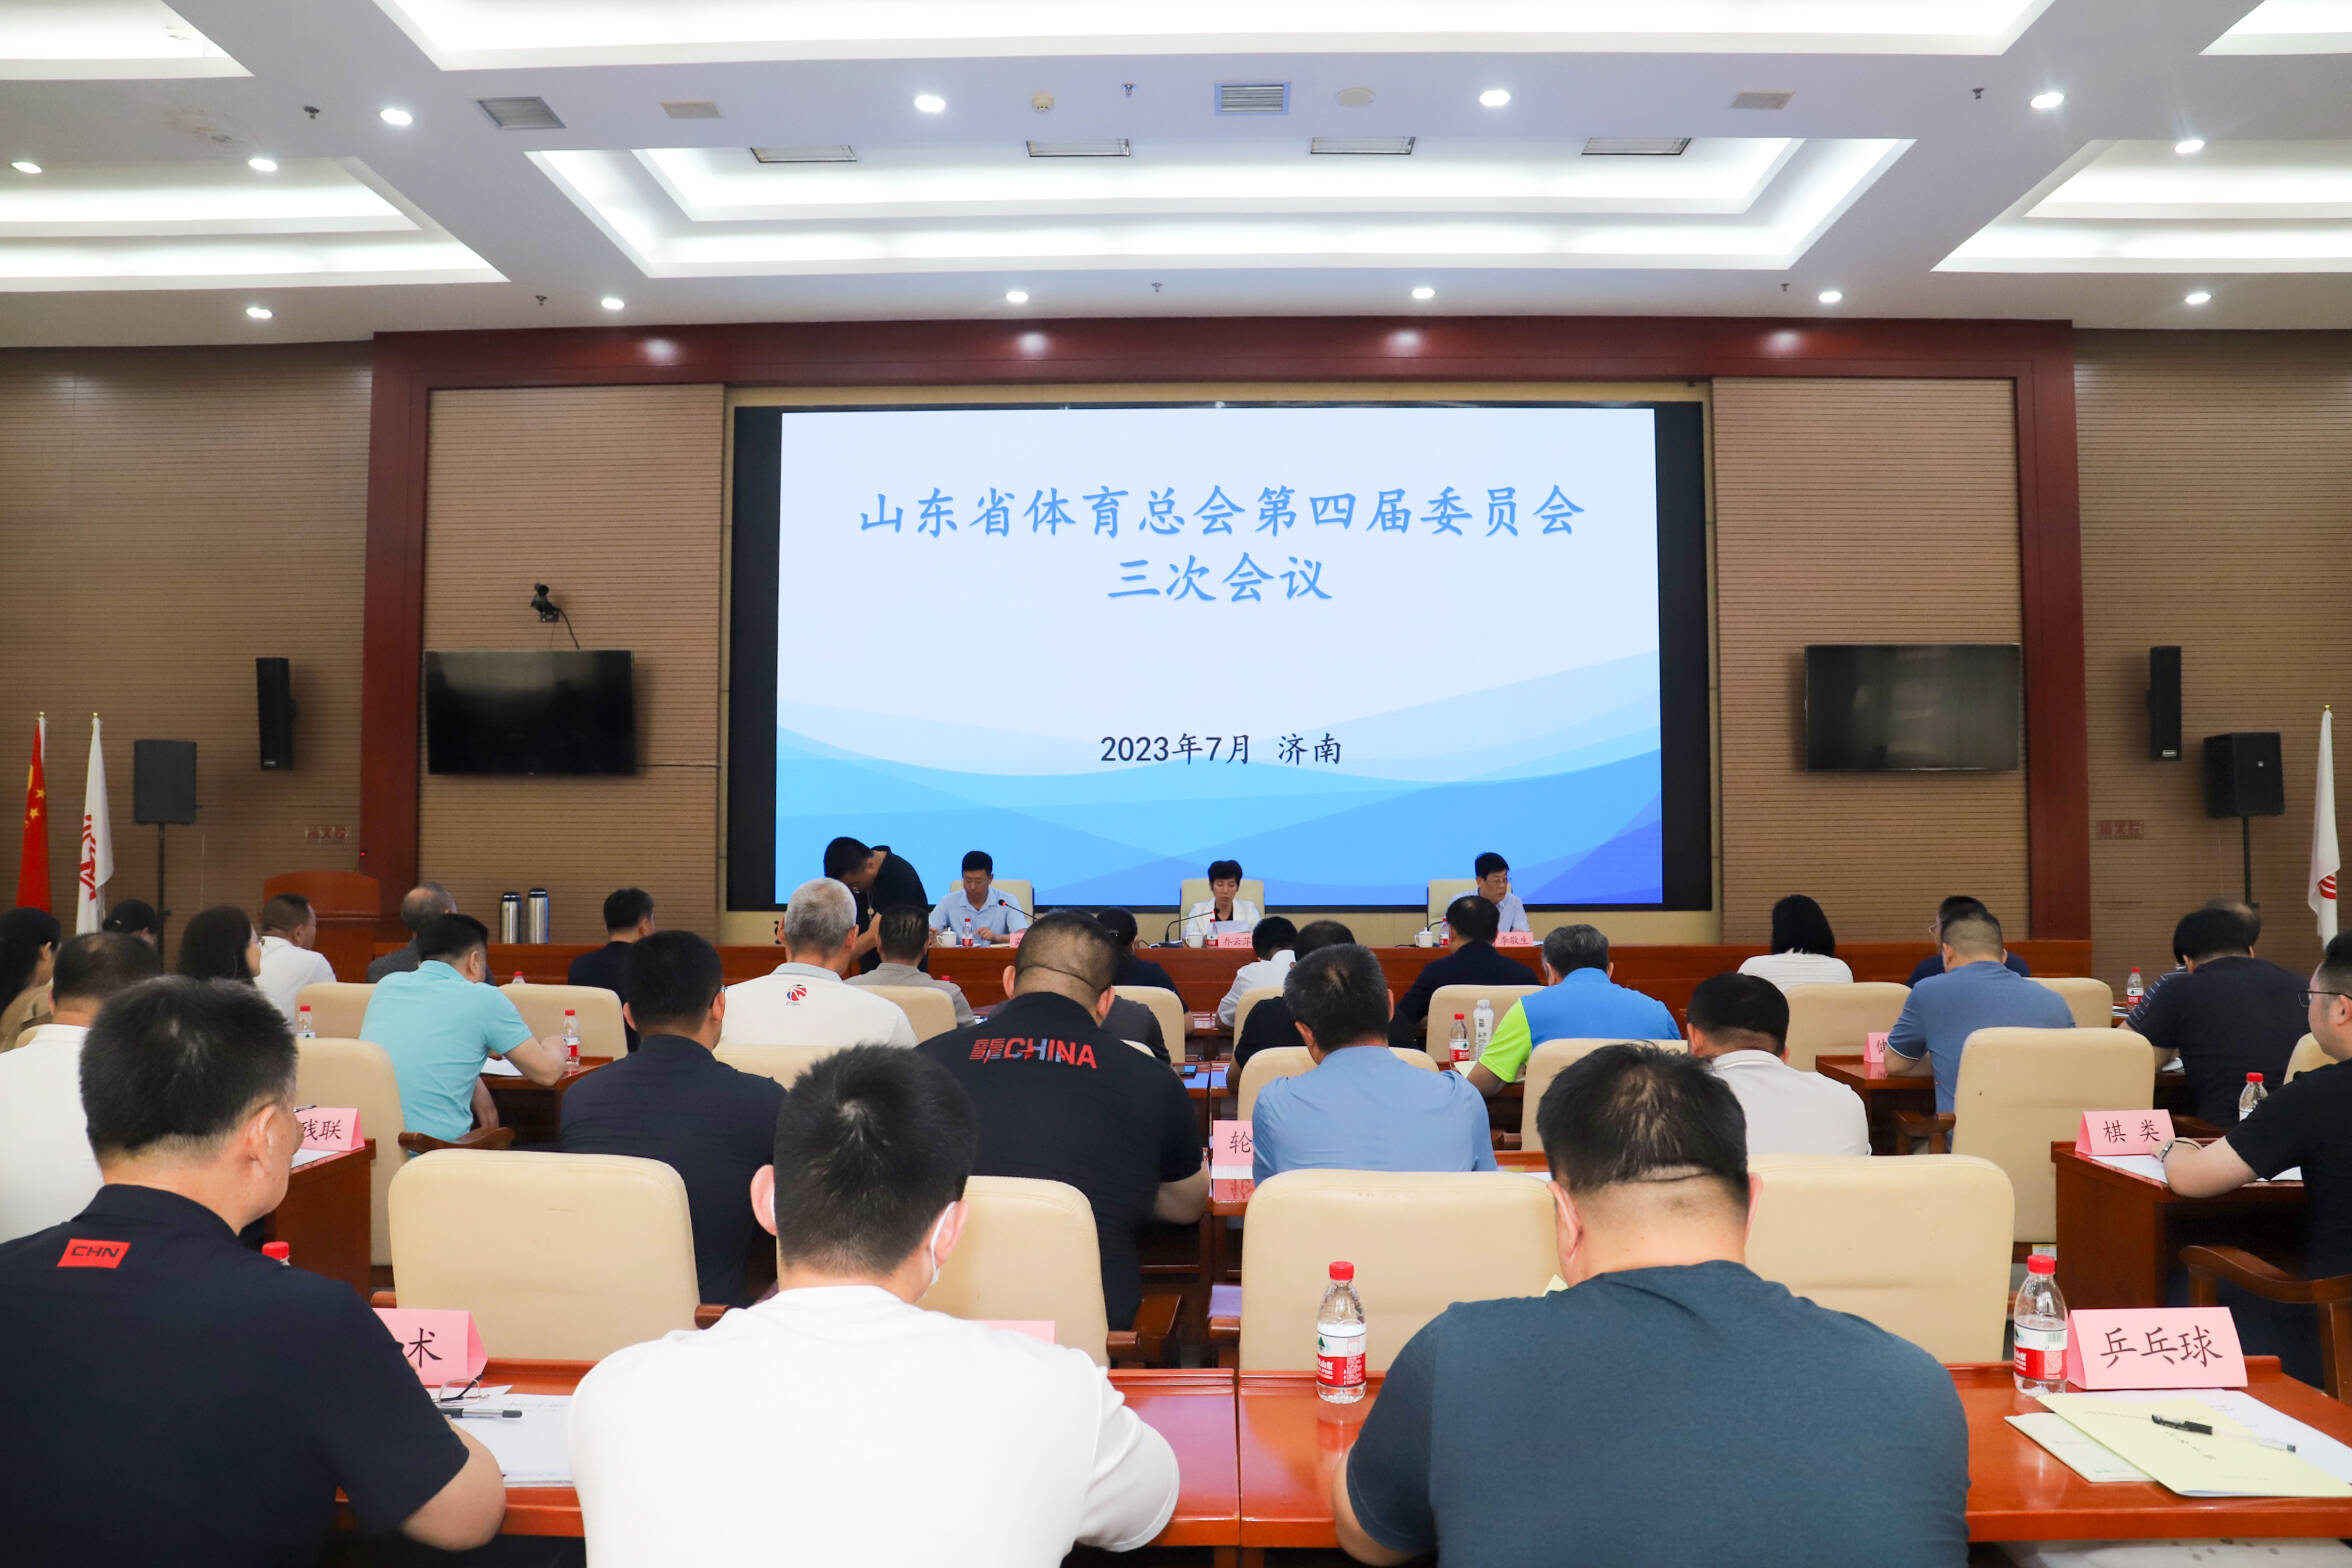 ＂Da Mei Qinghai＂ on sports ＂two expo＂